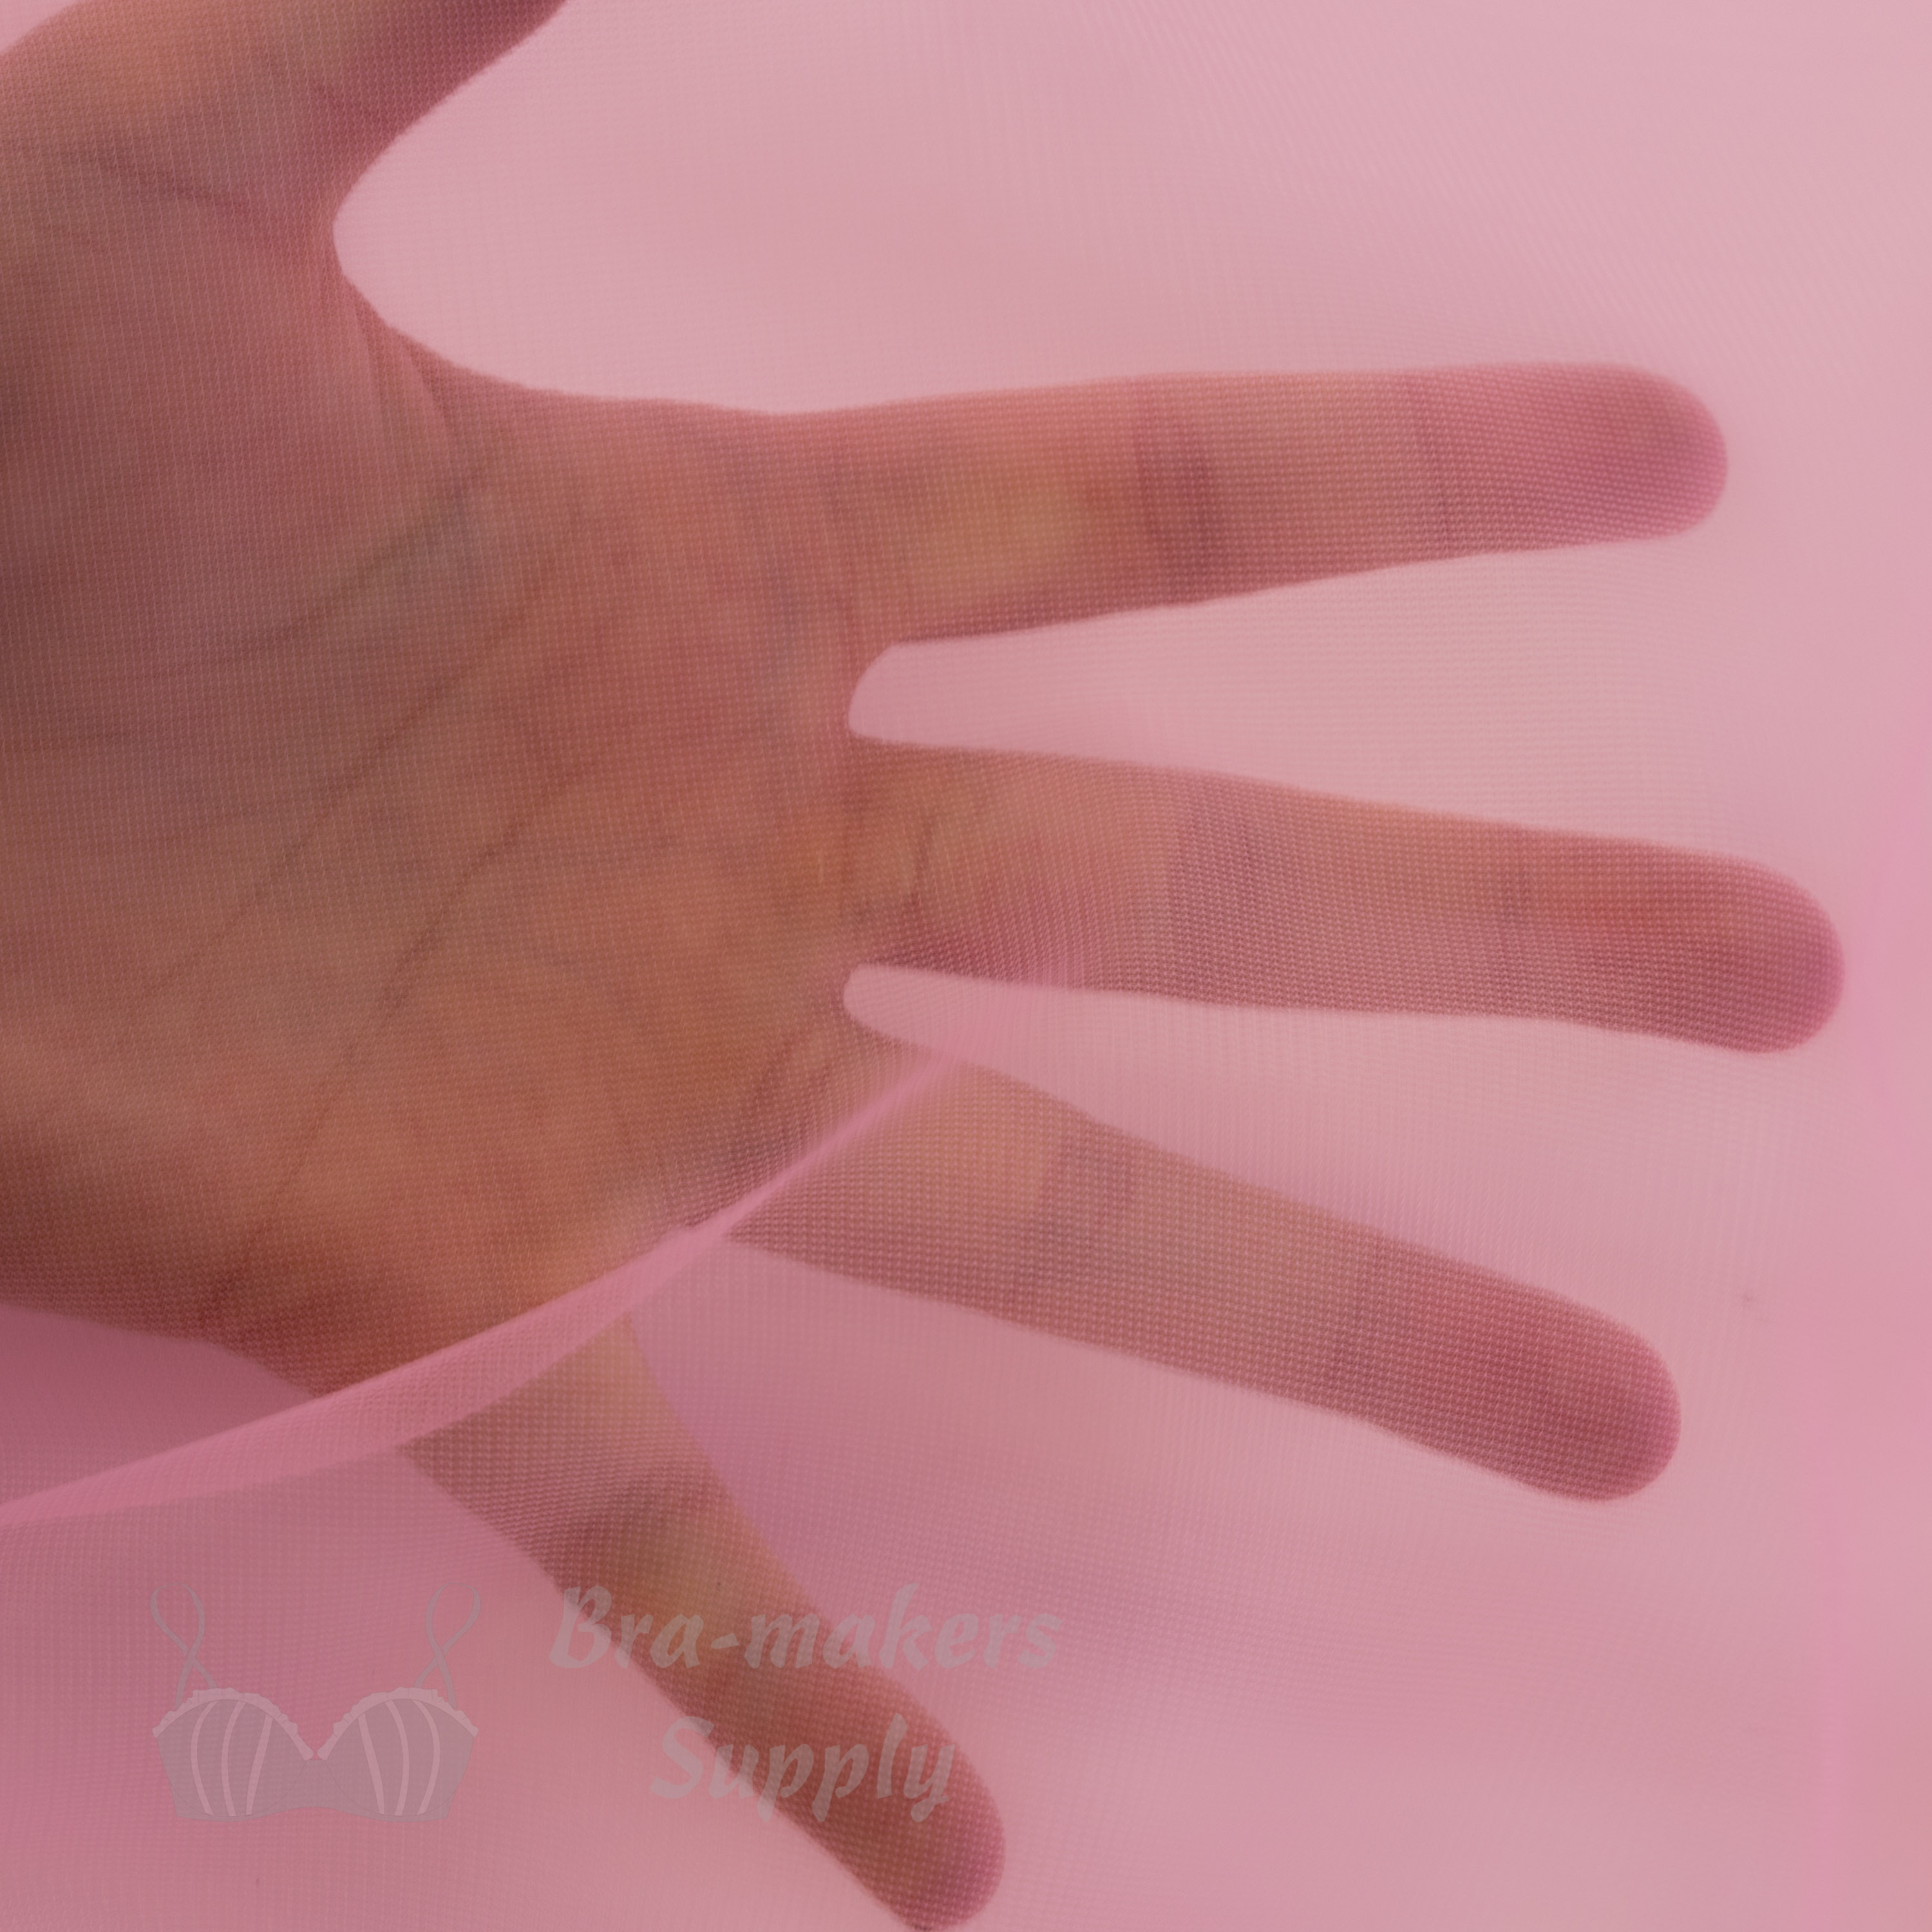 https://www.braandcorsetsupplies.com/wp-content/uploads/2016/09/15-denier-sheer-nylon-fabric-FL-15-bubblegum-pink-from-Bra-Makers-Supply-hand-shown.jpg